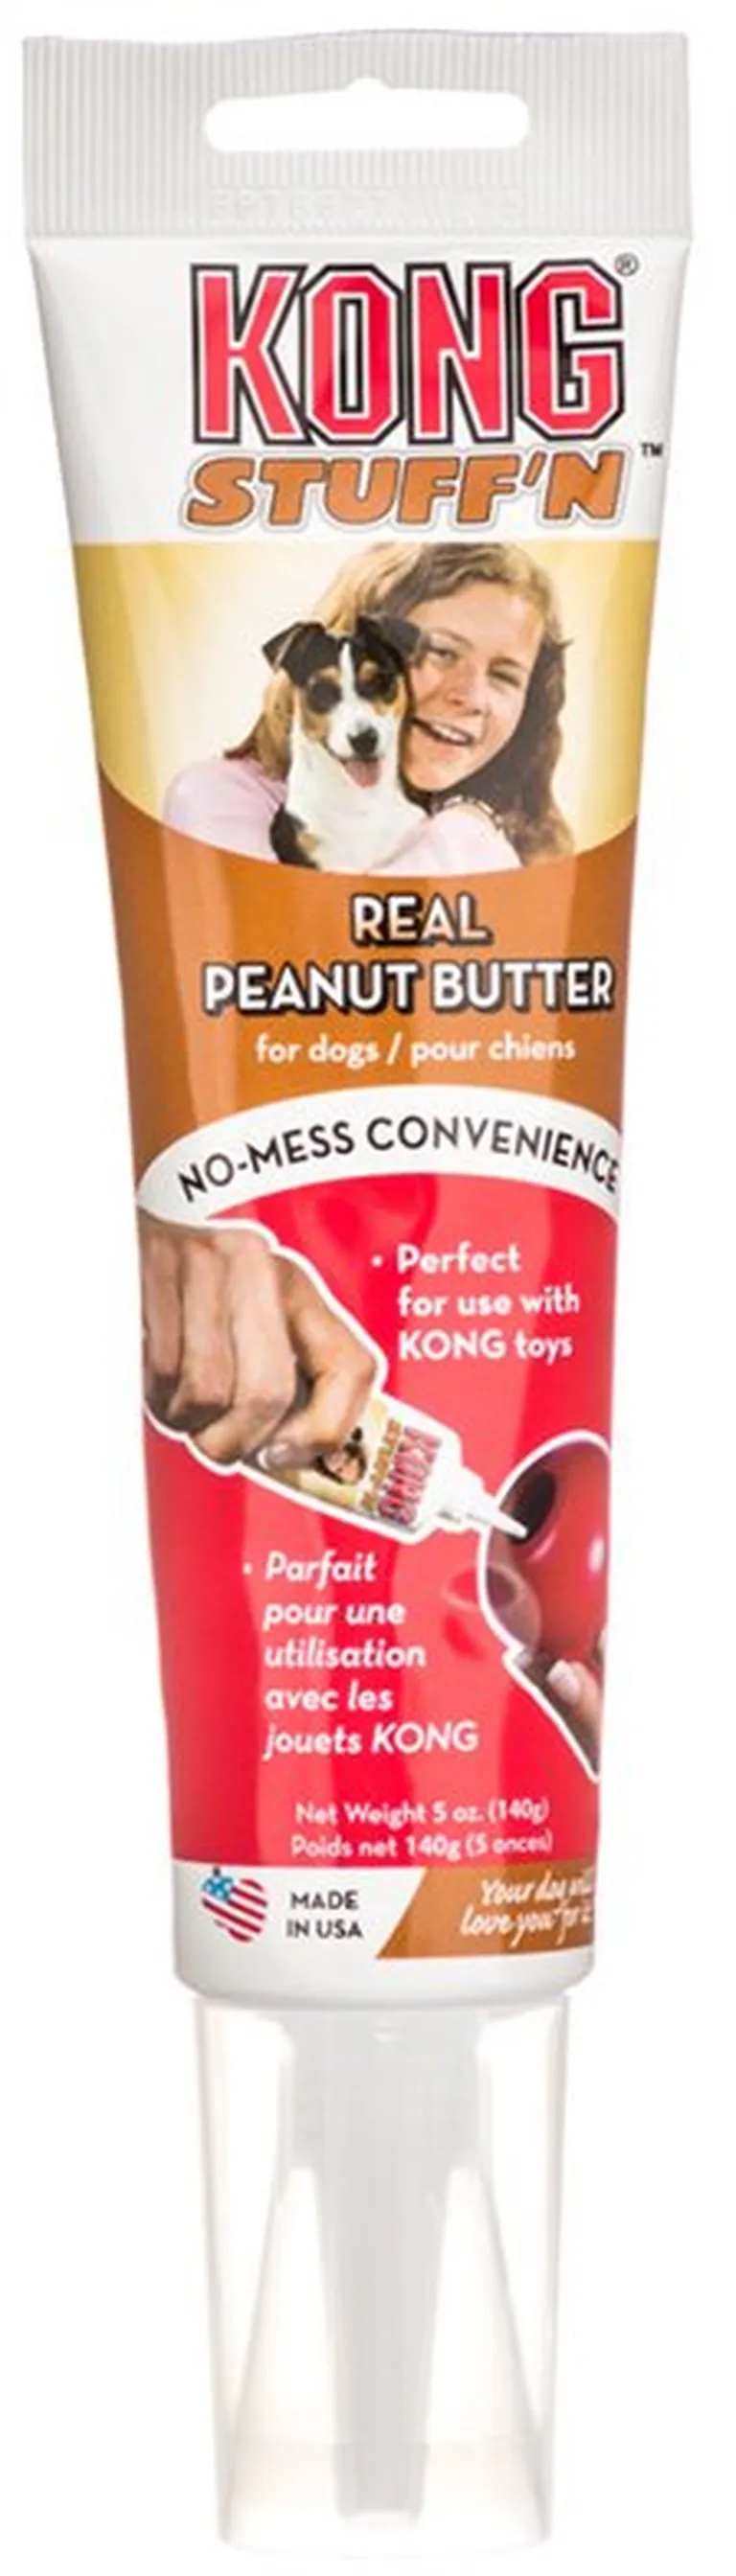 KONG Stuff'N Real Peanut Butter Photo 1